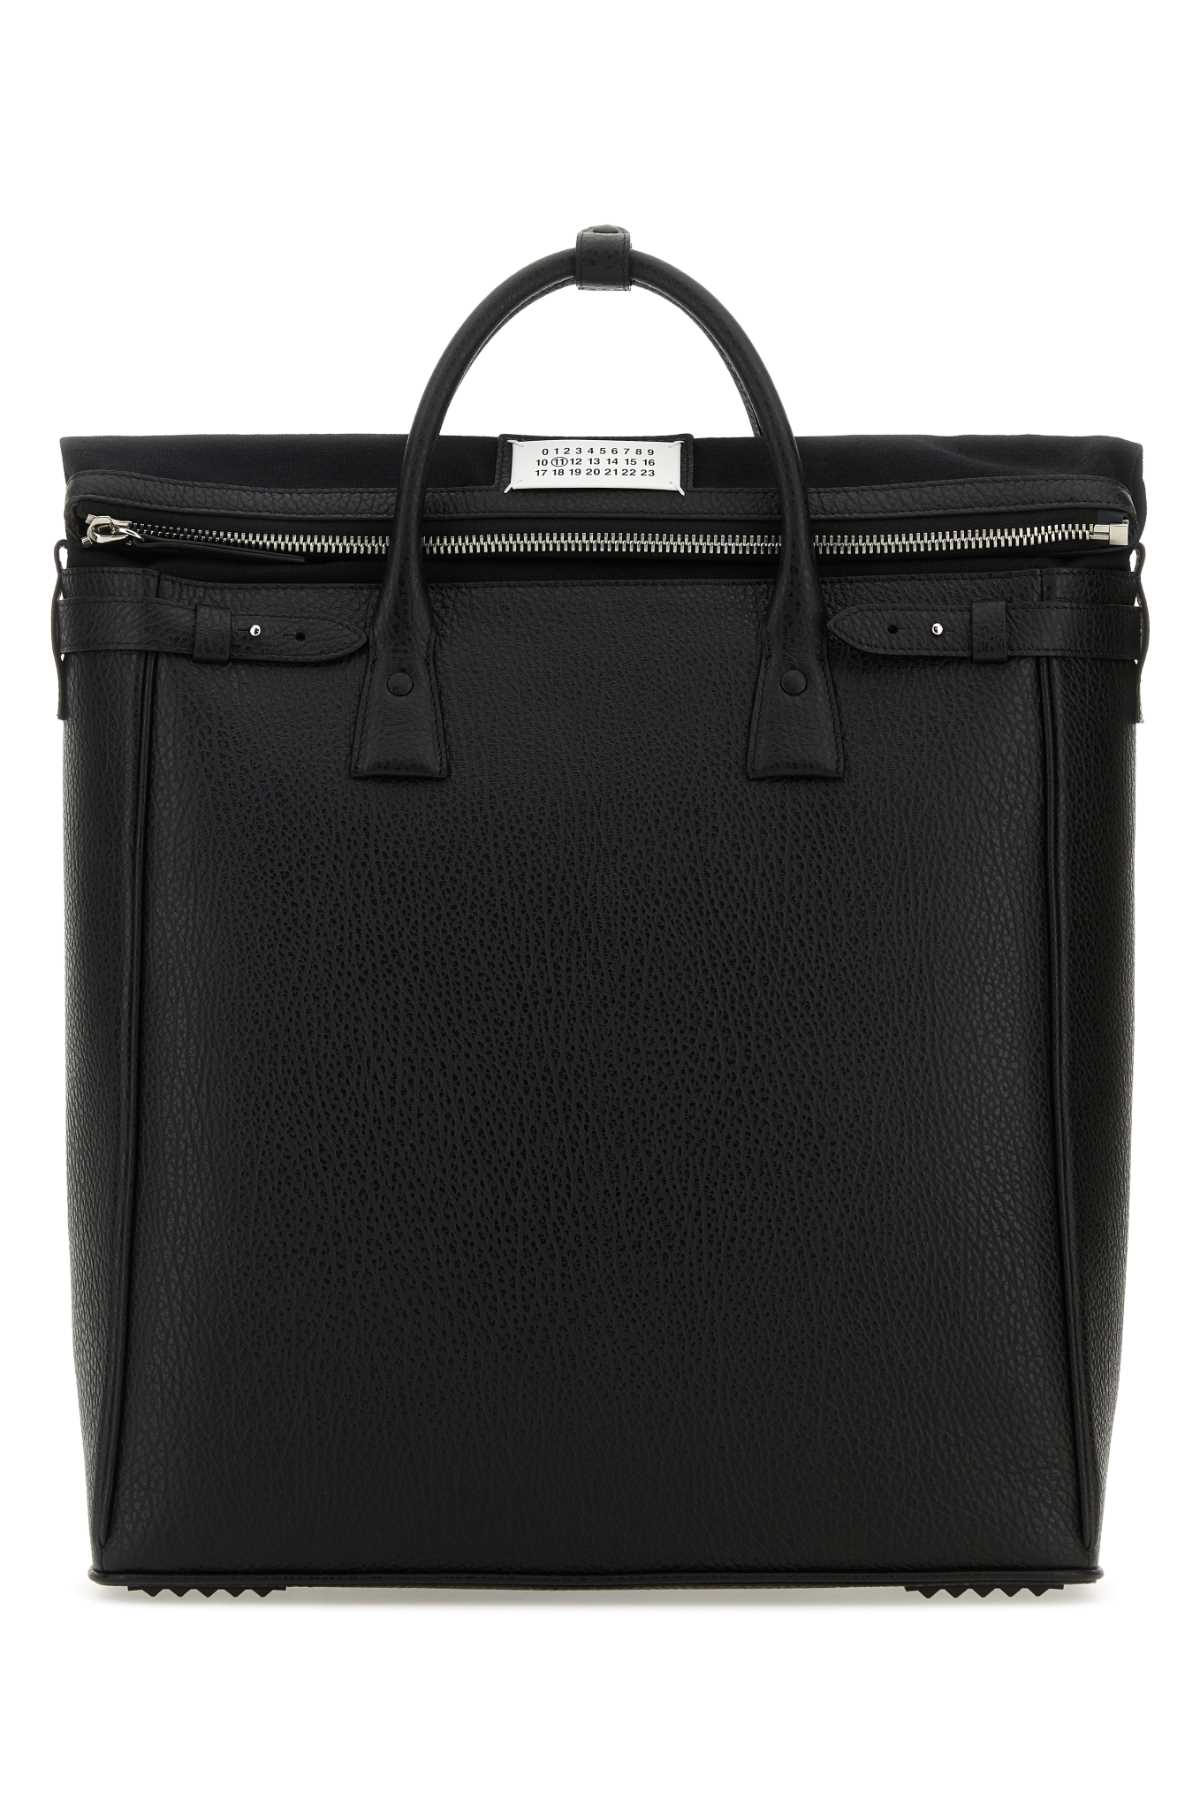 Maison Margiela Black Leather 5a Handbag